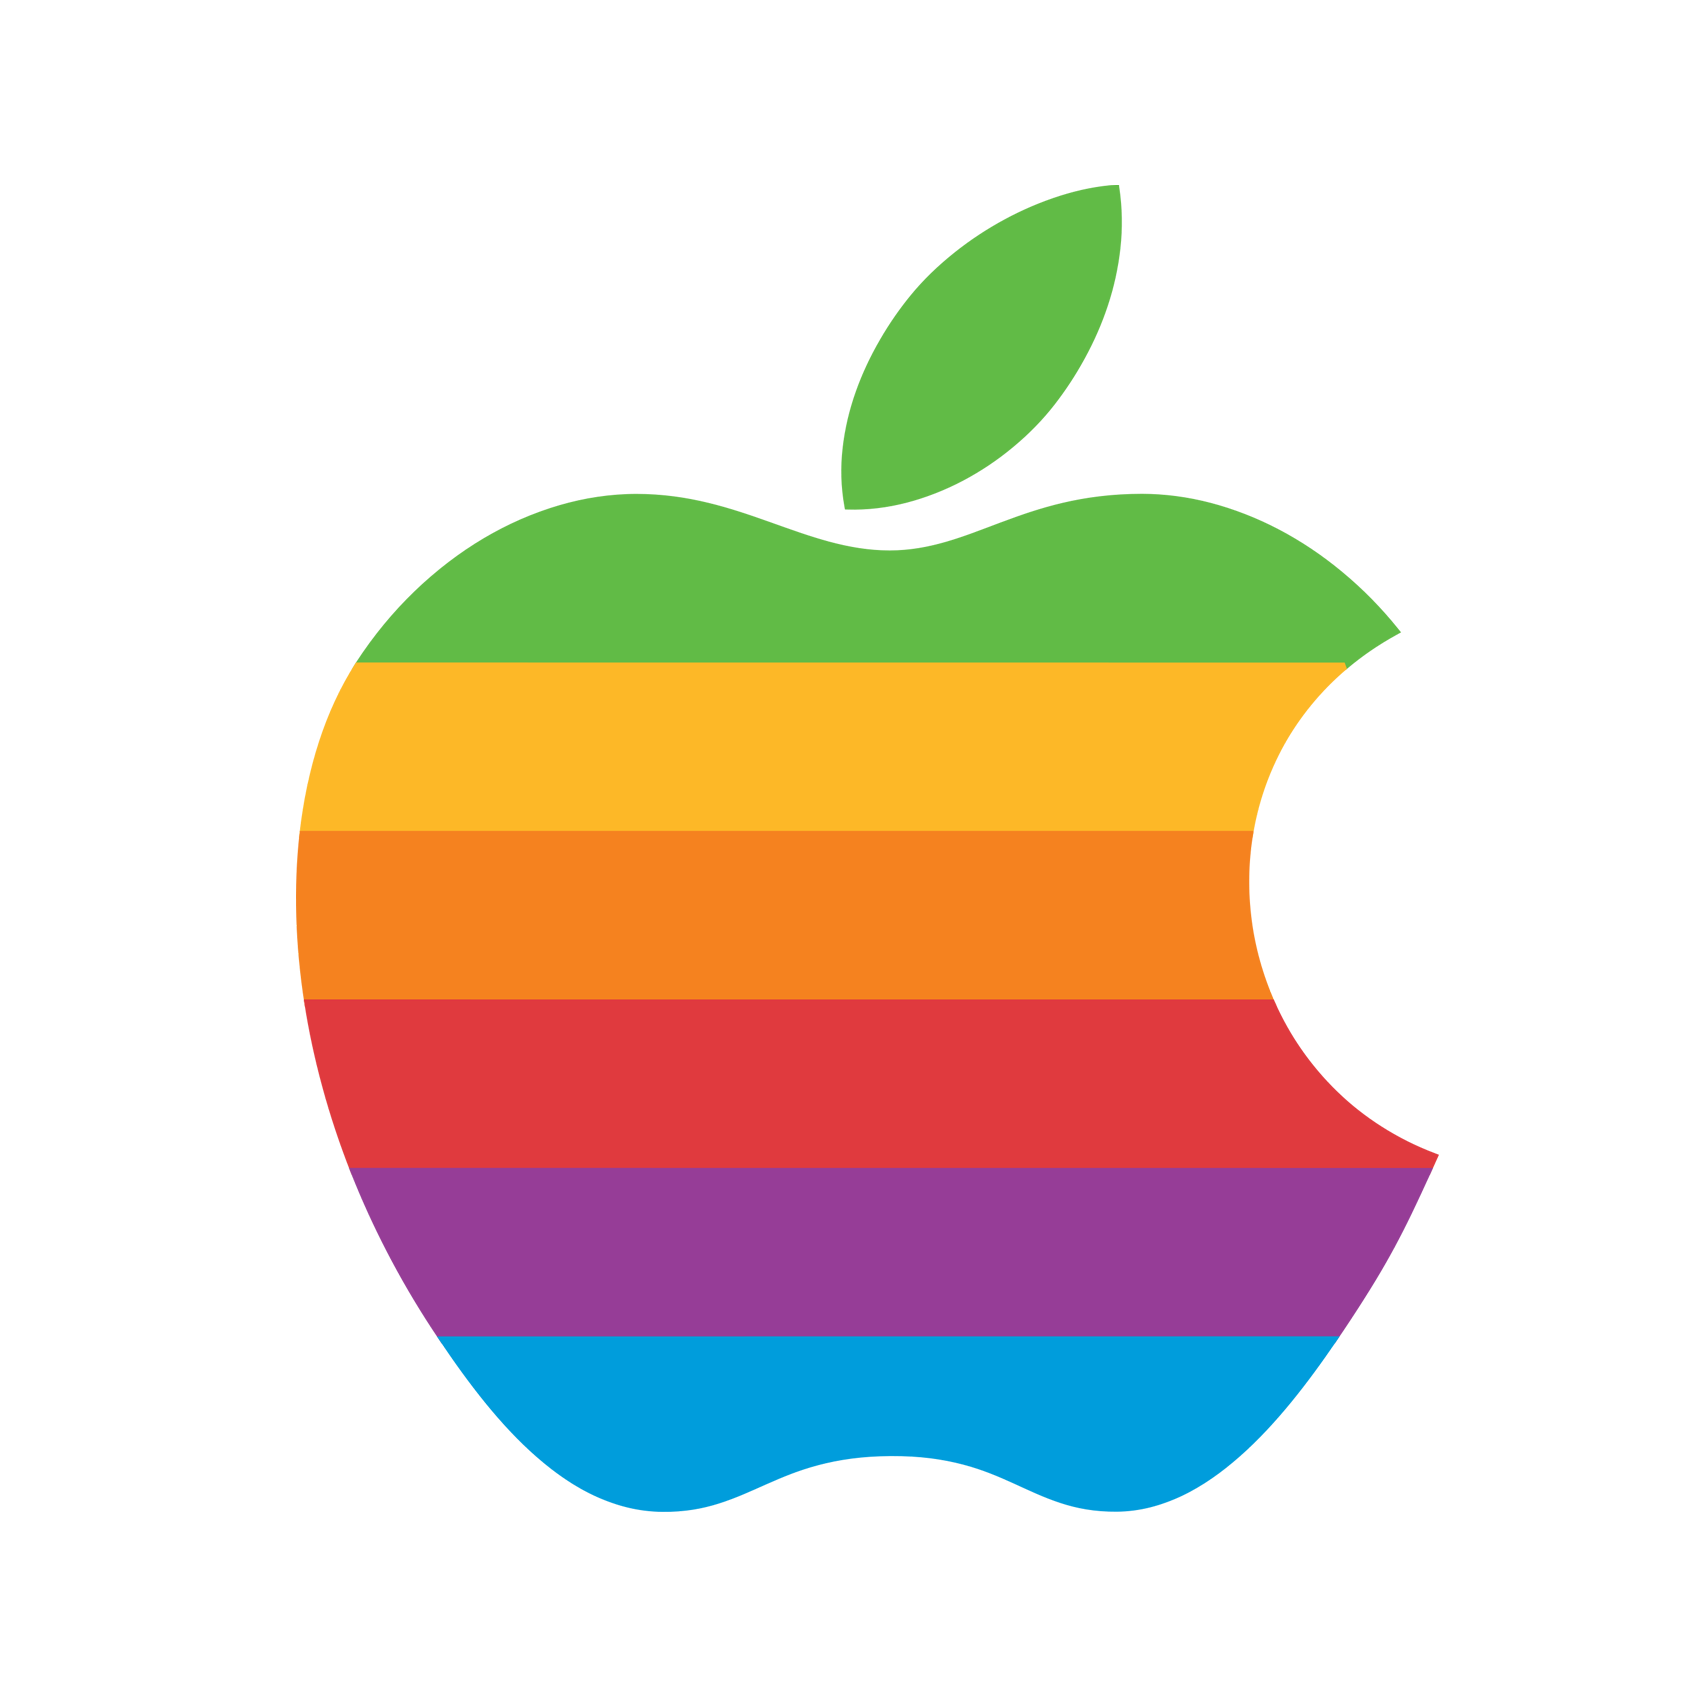 26045-5-apple-logo-transparent-background-50a79e87-4db8-49bb-8dc3-52b6c325cd38.png